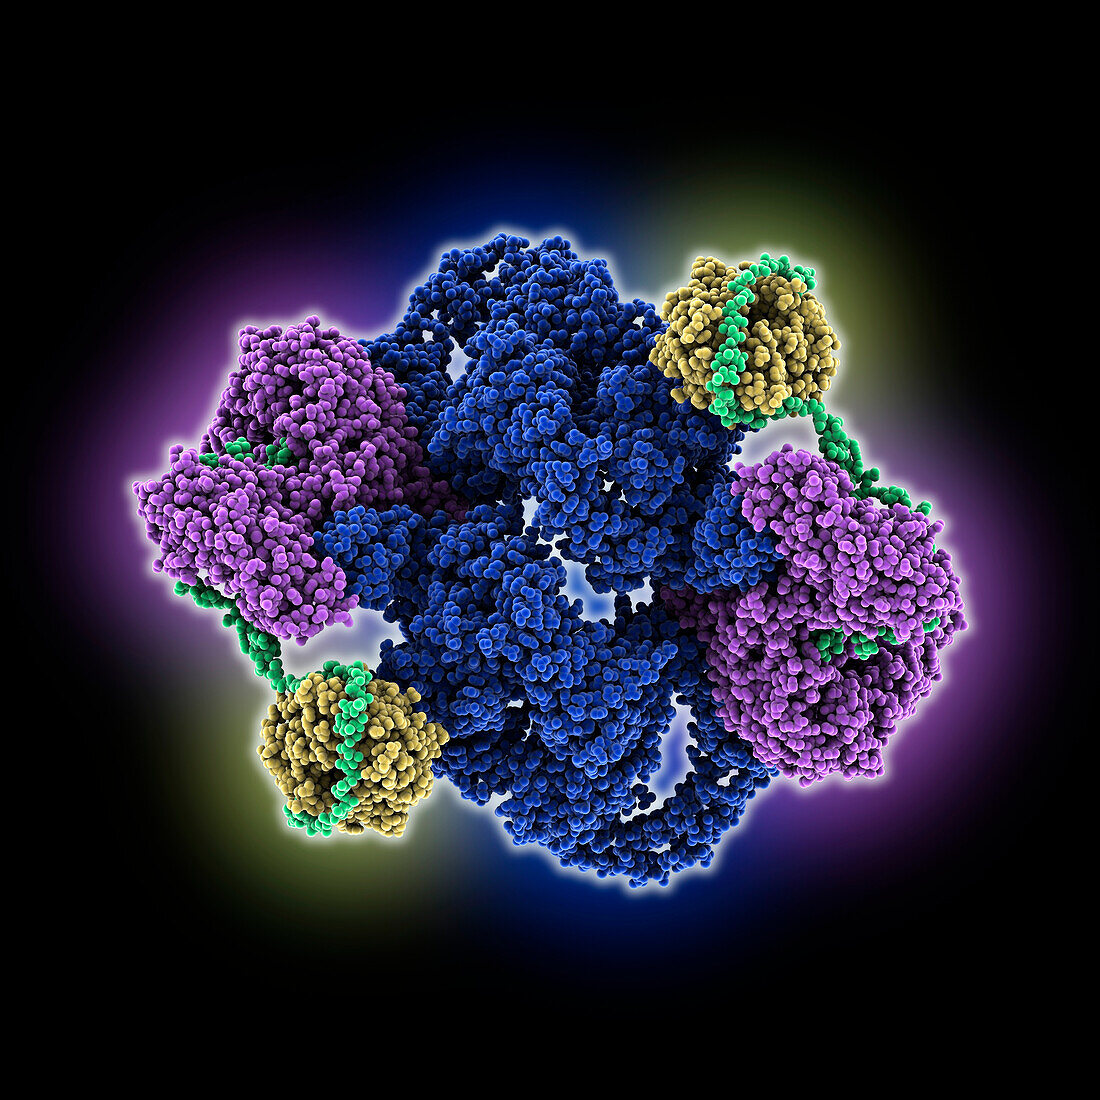 Apo structure of human mTORC2 complex, molecular model